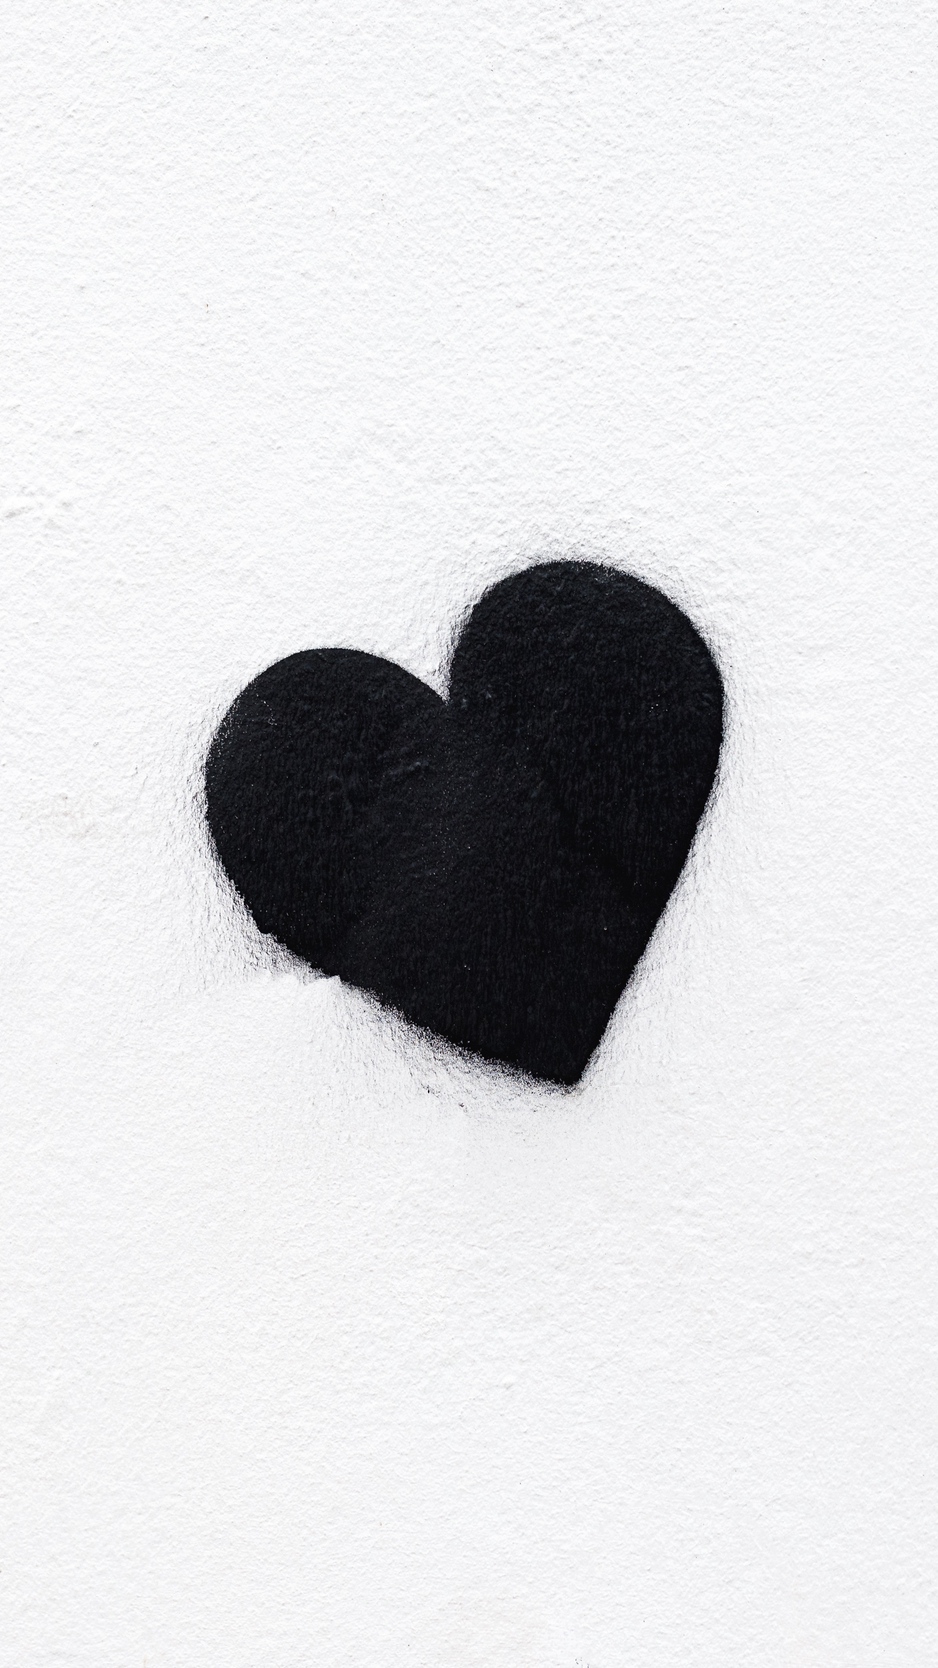 Wallpaper Heart Bw Love Black White Minimalism One Heart Background Black And White 938x1668 Wallpaper Teahub Io